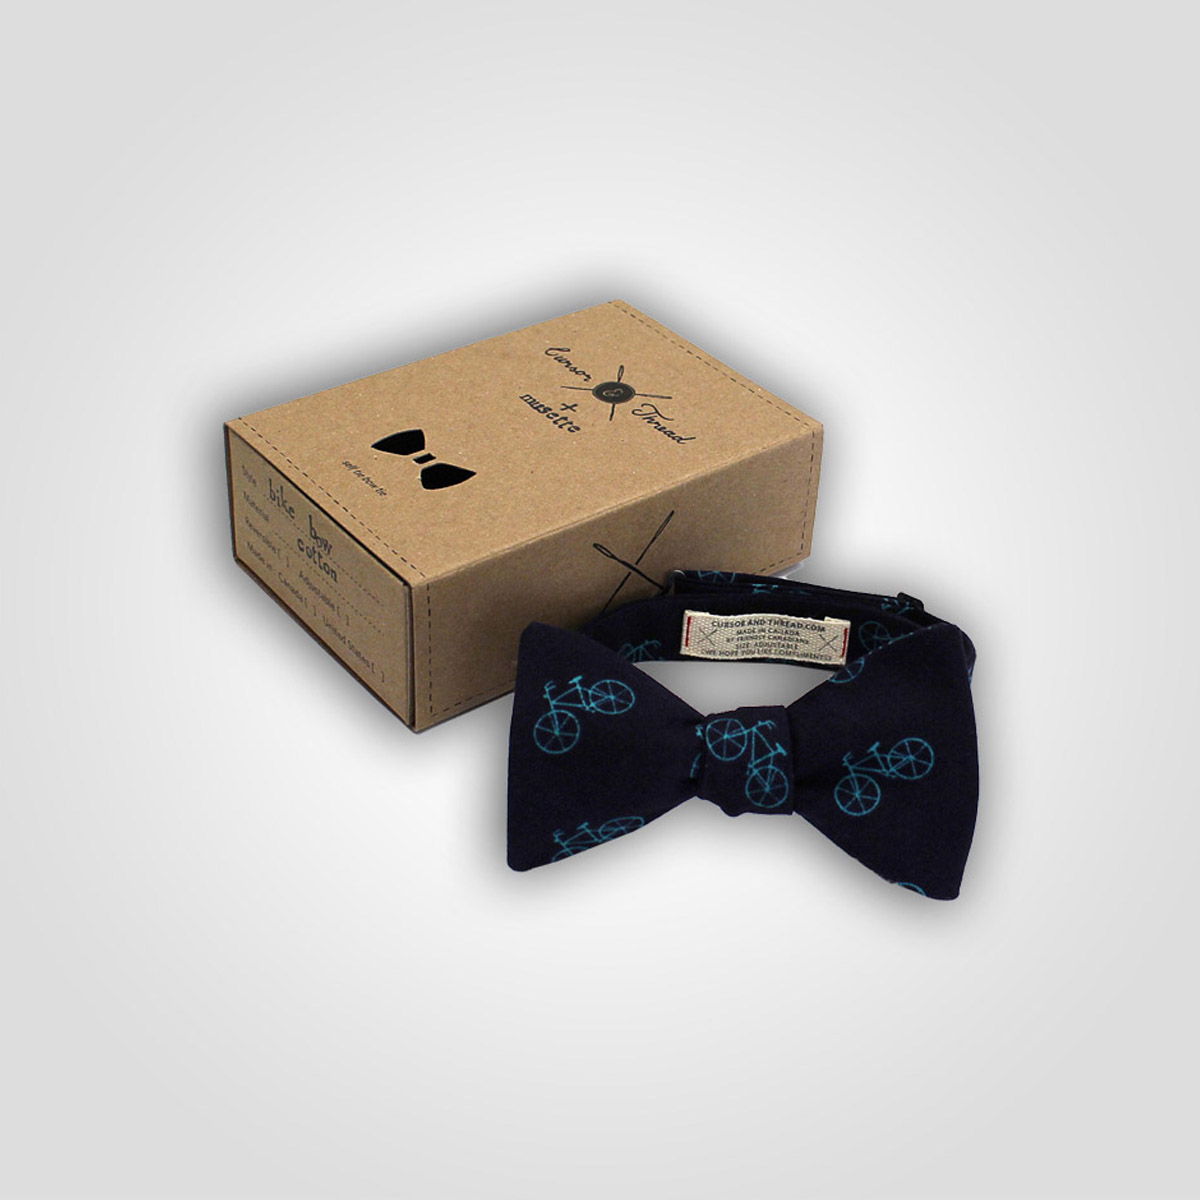 Custom Tie Boxes Wholesale - Necktie Boxes Packaging